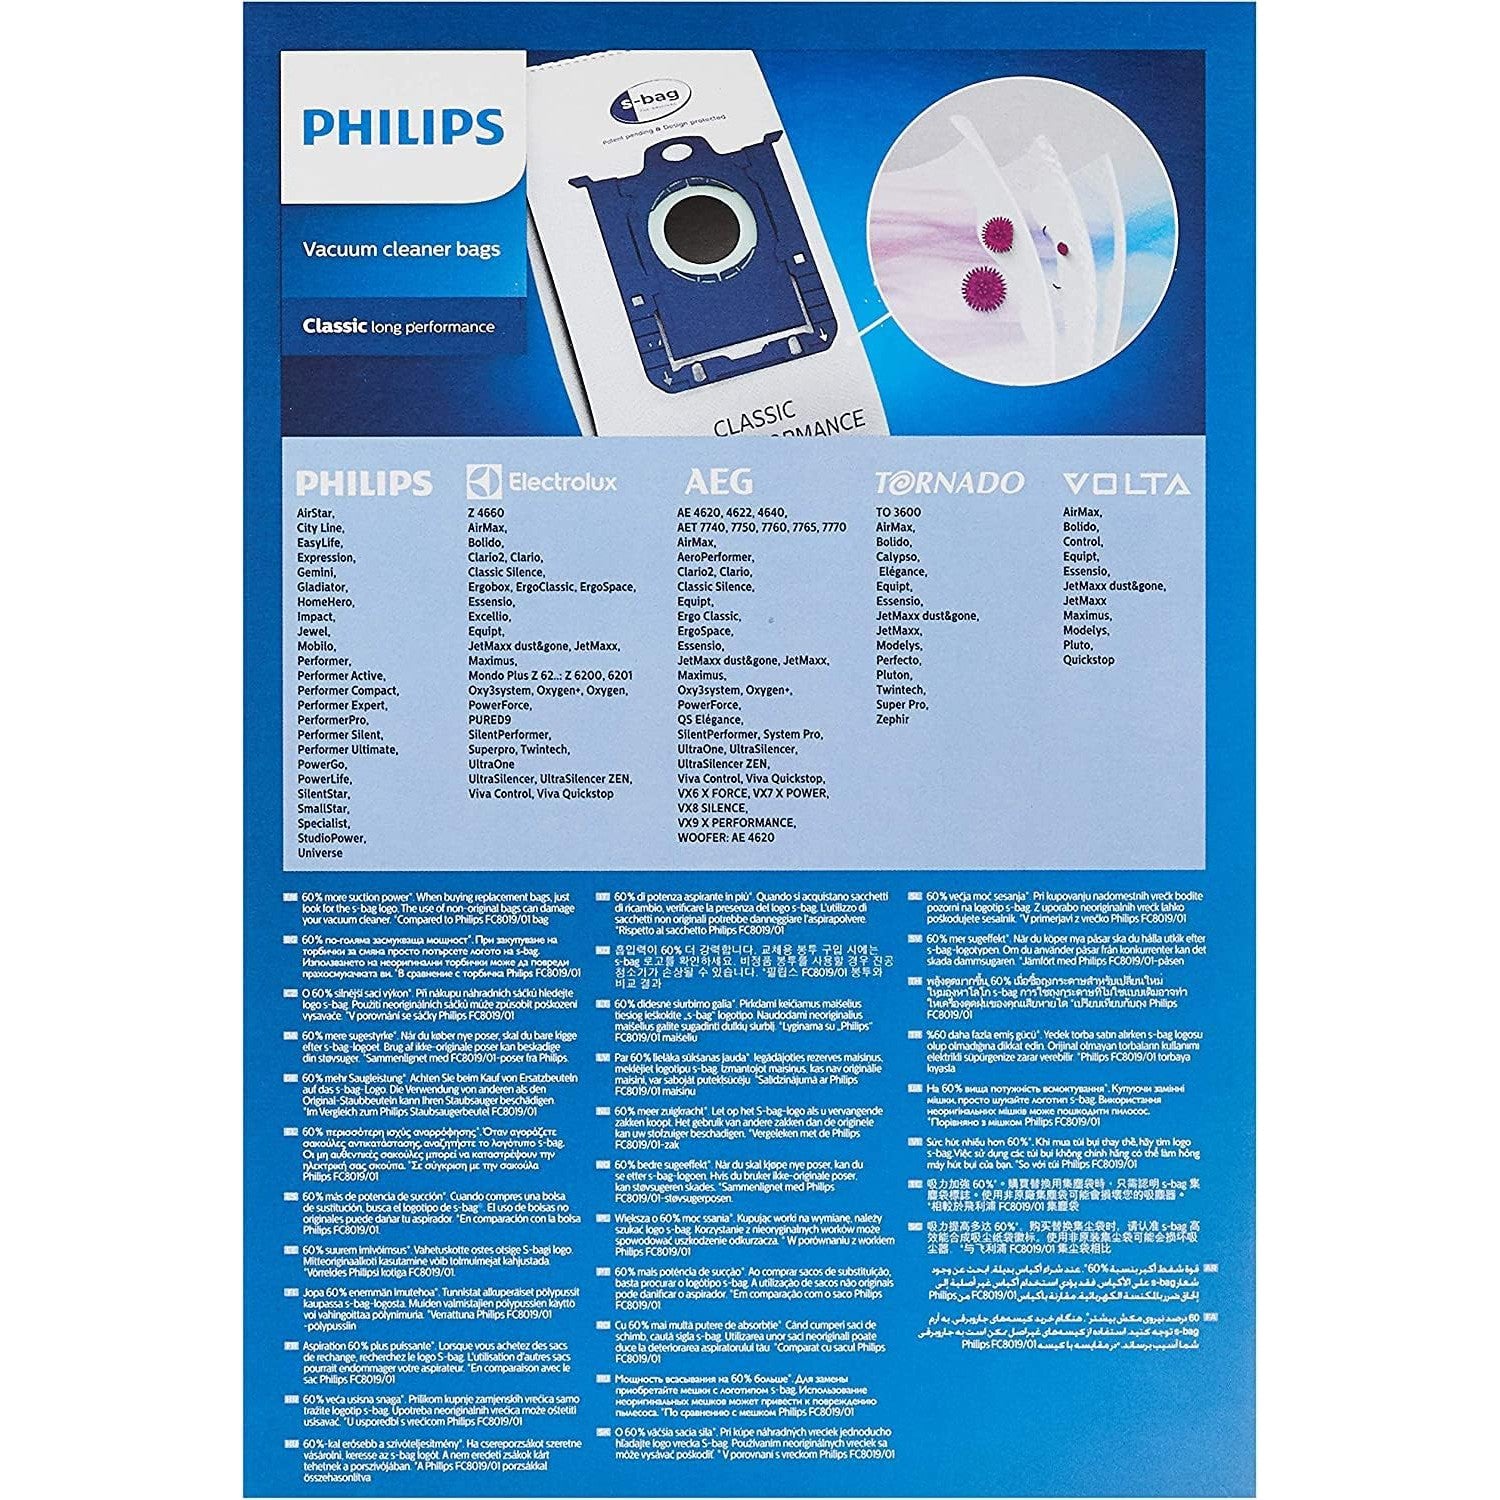 Philips FC8021/03 S-Bag Classic Vacuum Cleaner Bags - Pack of 4